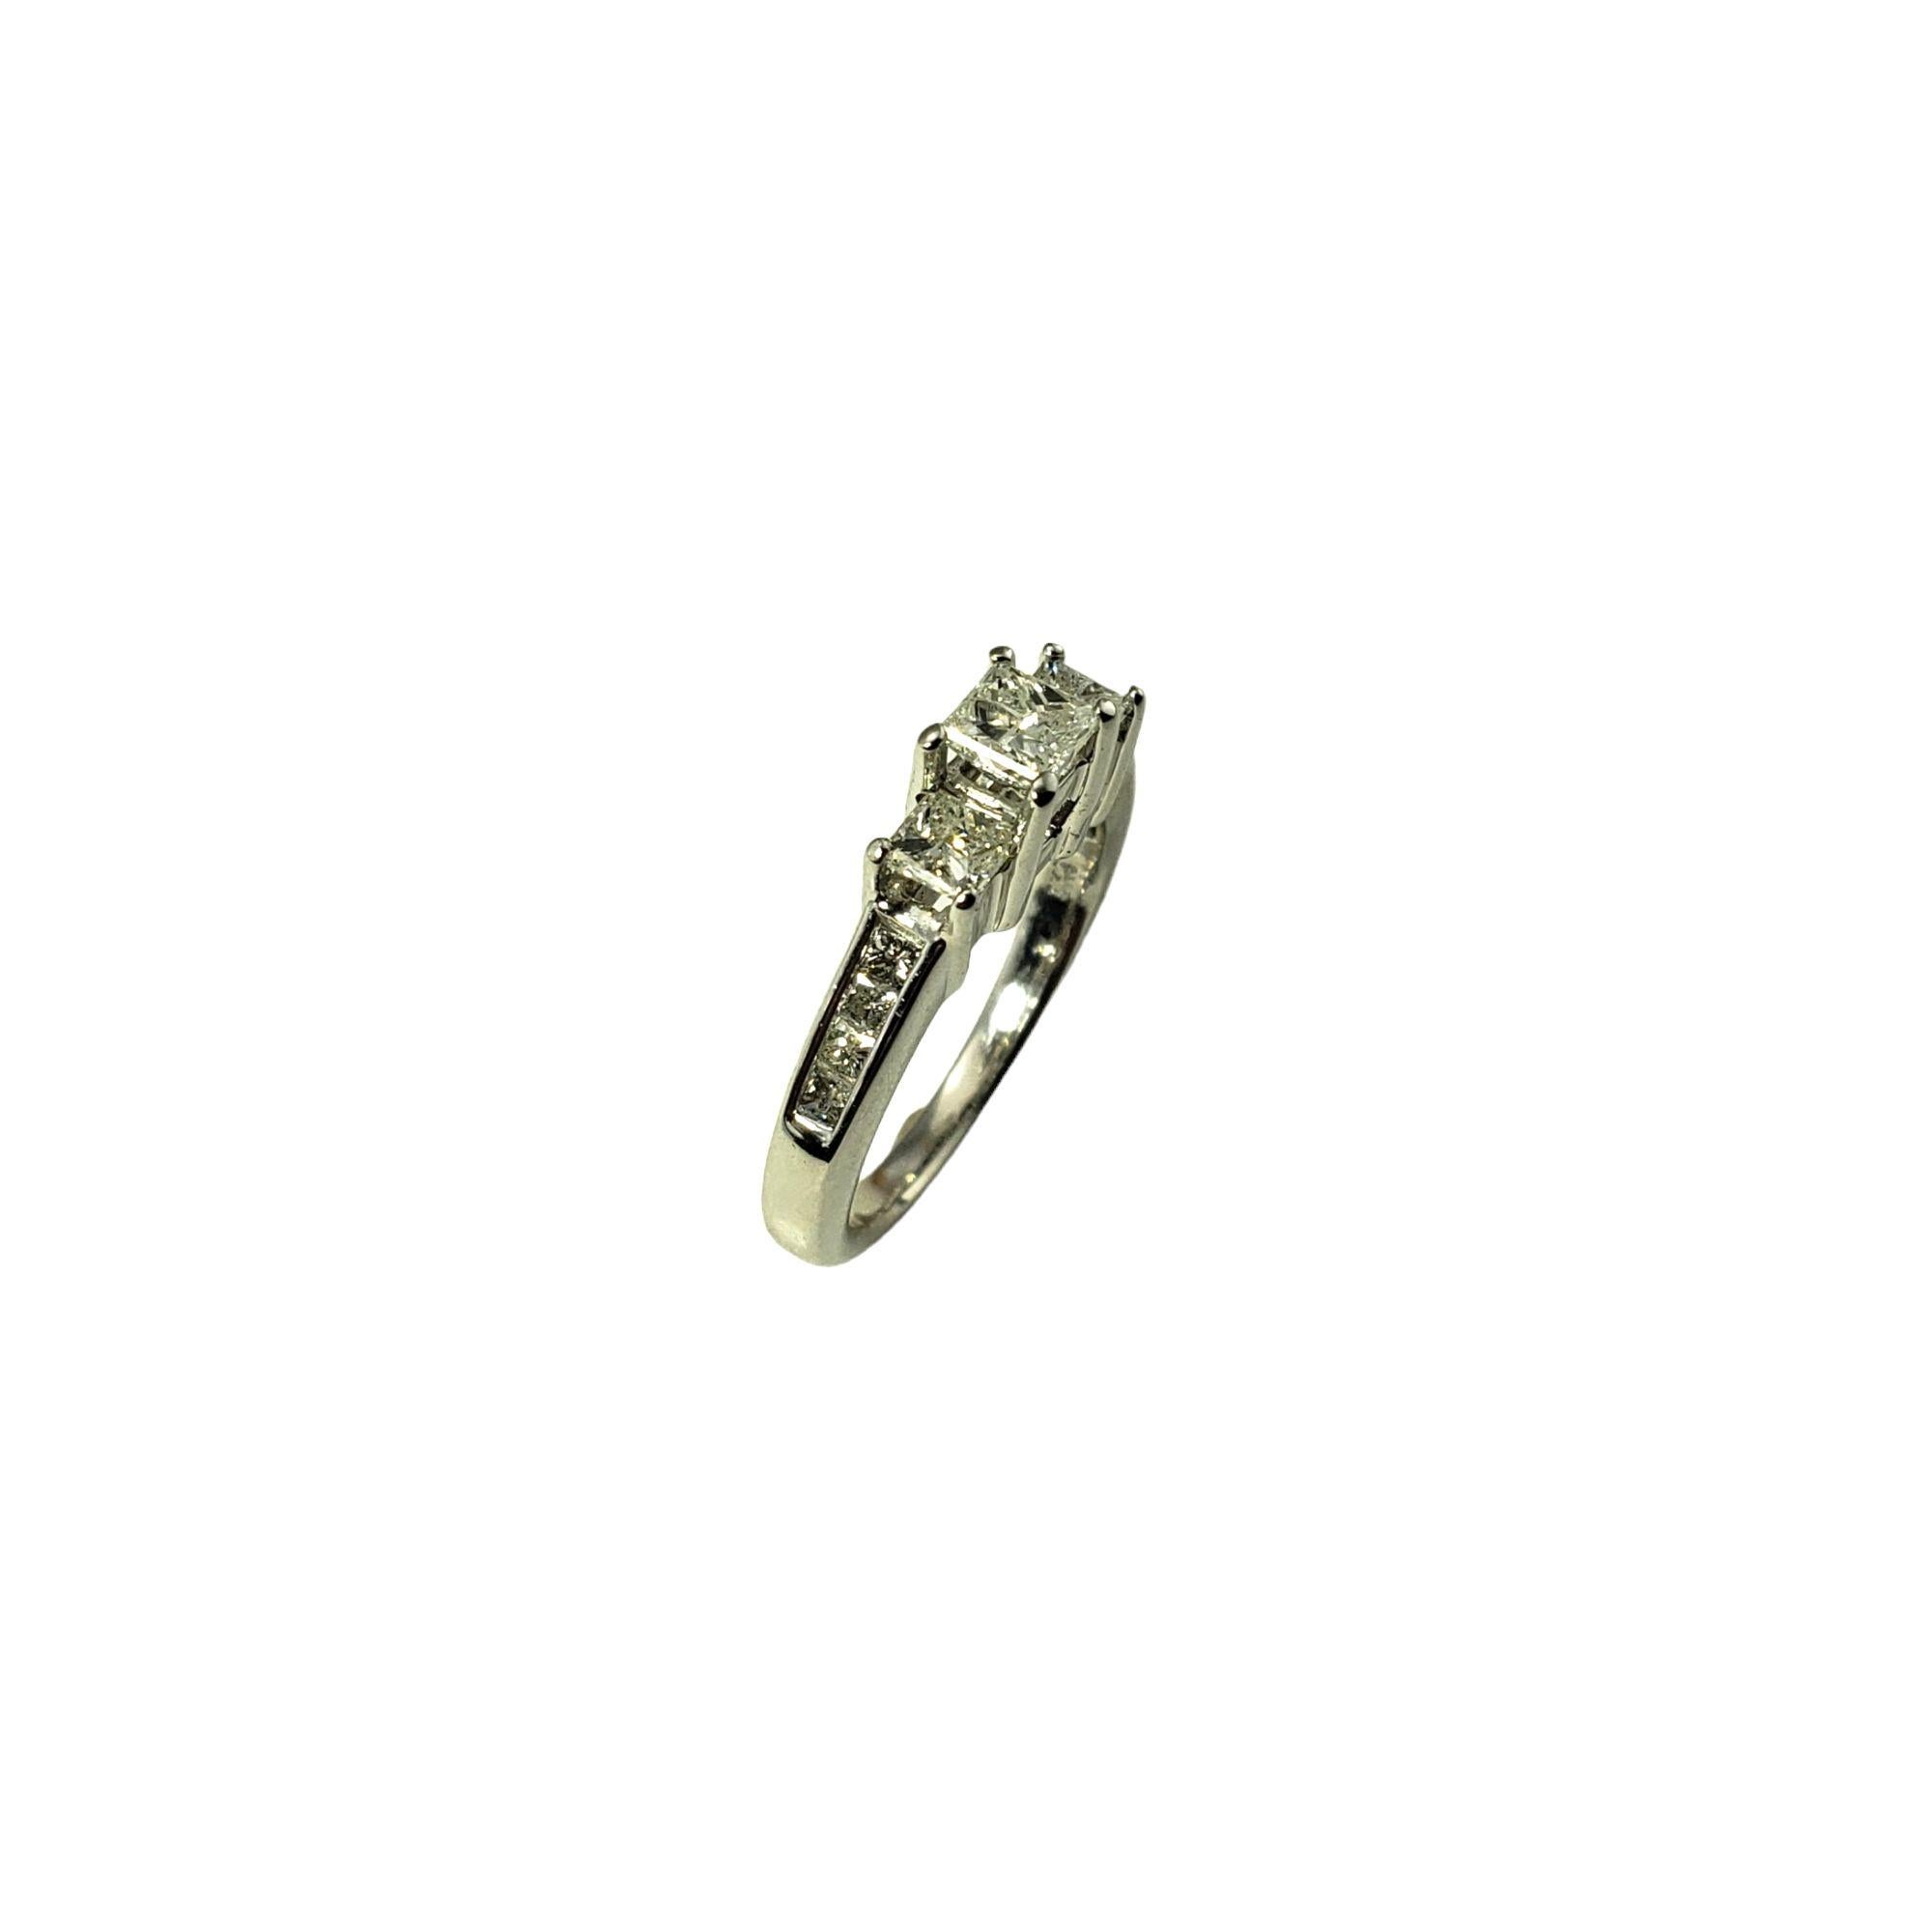 Vintage 14 Karat White Gold Princess Cut Diamond Engagement Ring Size 4.25-

This sparkling engagement ring features 11 princess cut diamonds (three center diamonds: .20 ct., .35 ct., .20 ct.) set in elegant 14K white gold. Width: 5 mm.

Shank: 2